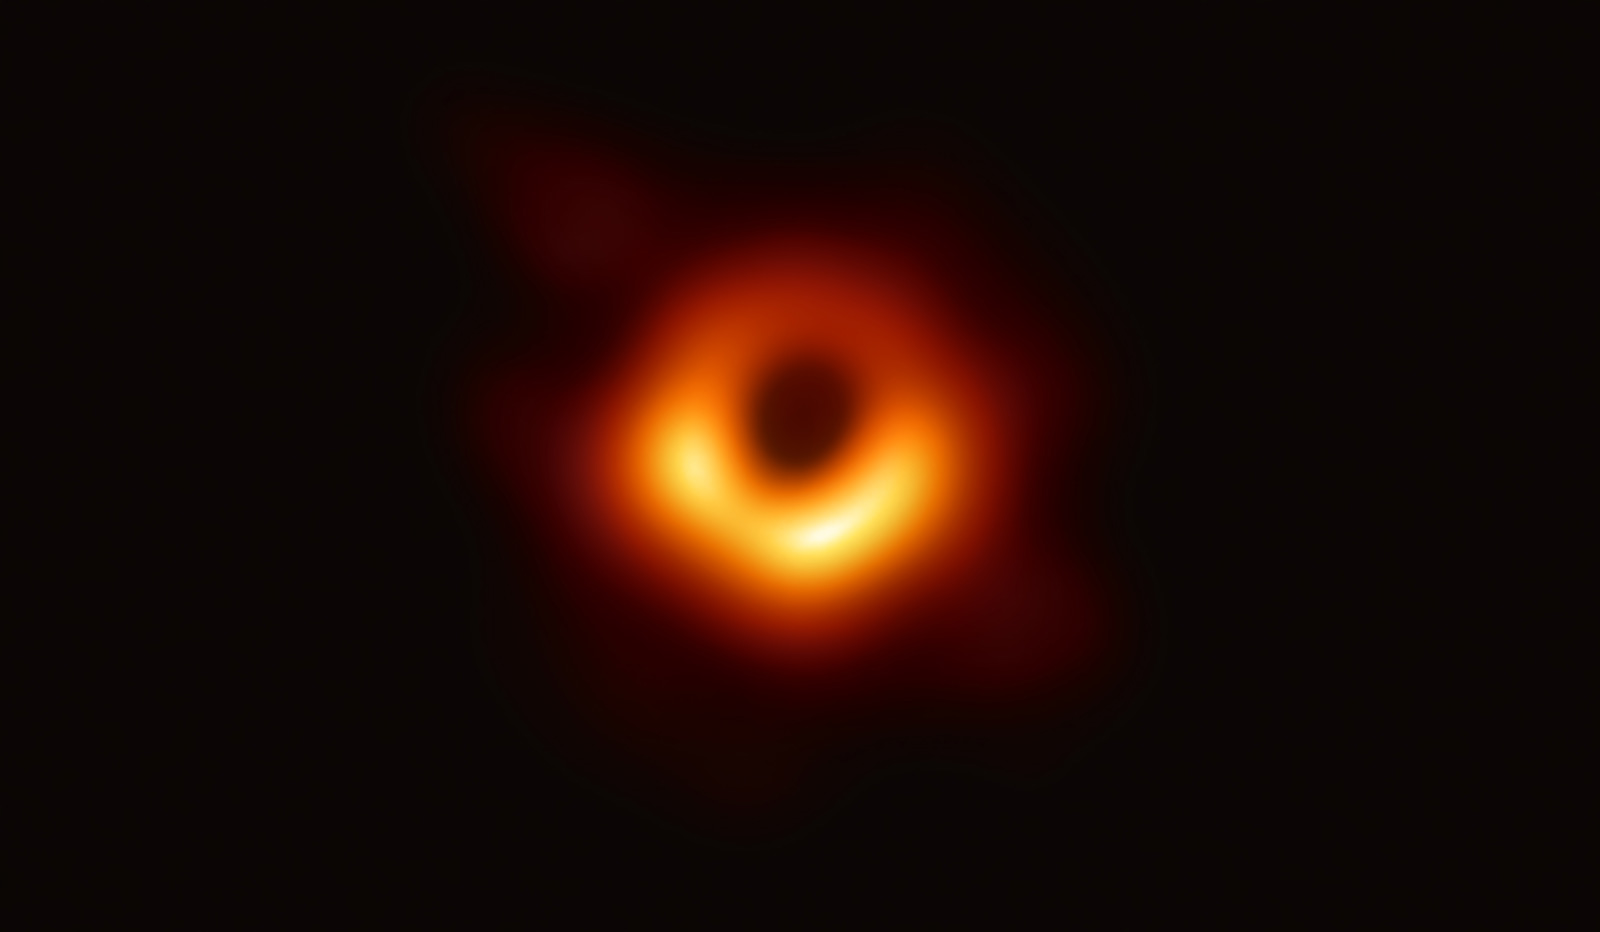 Dark spot of a black hole ringed with bright orange light.